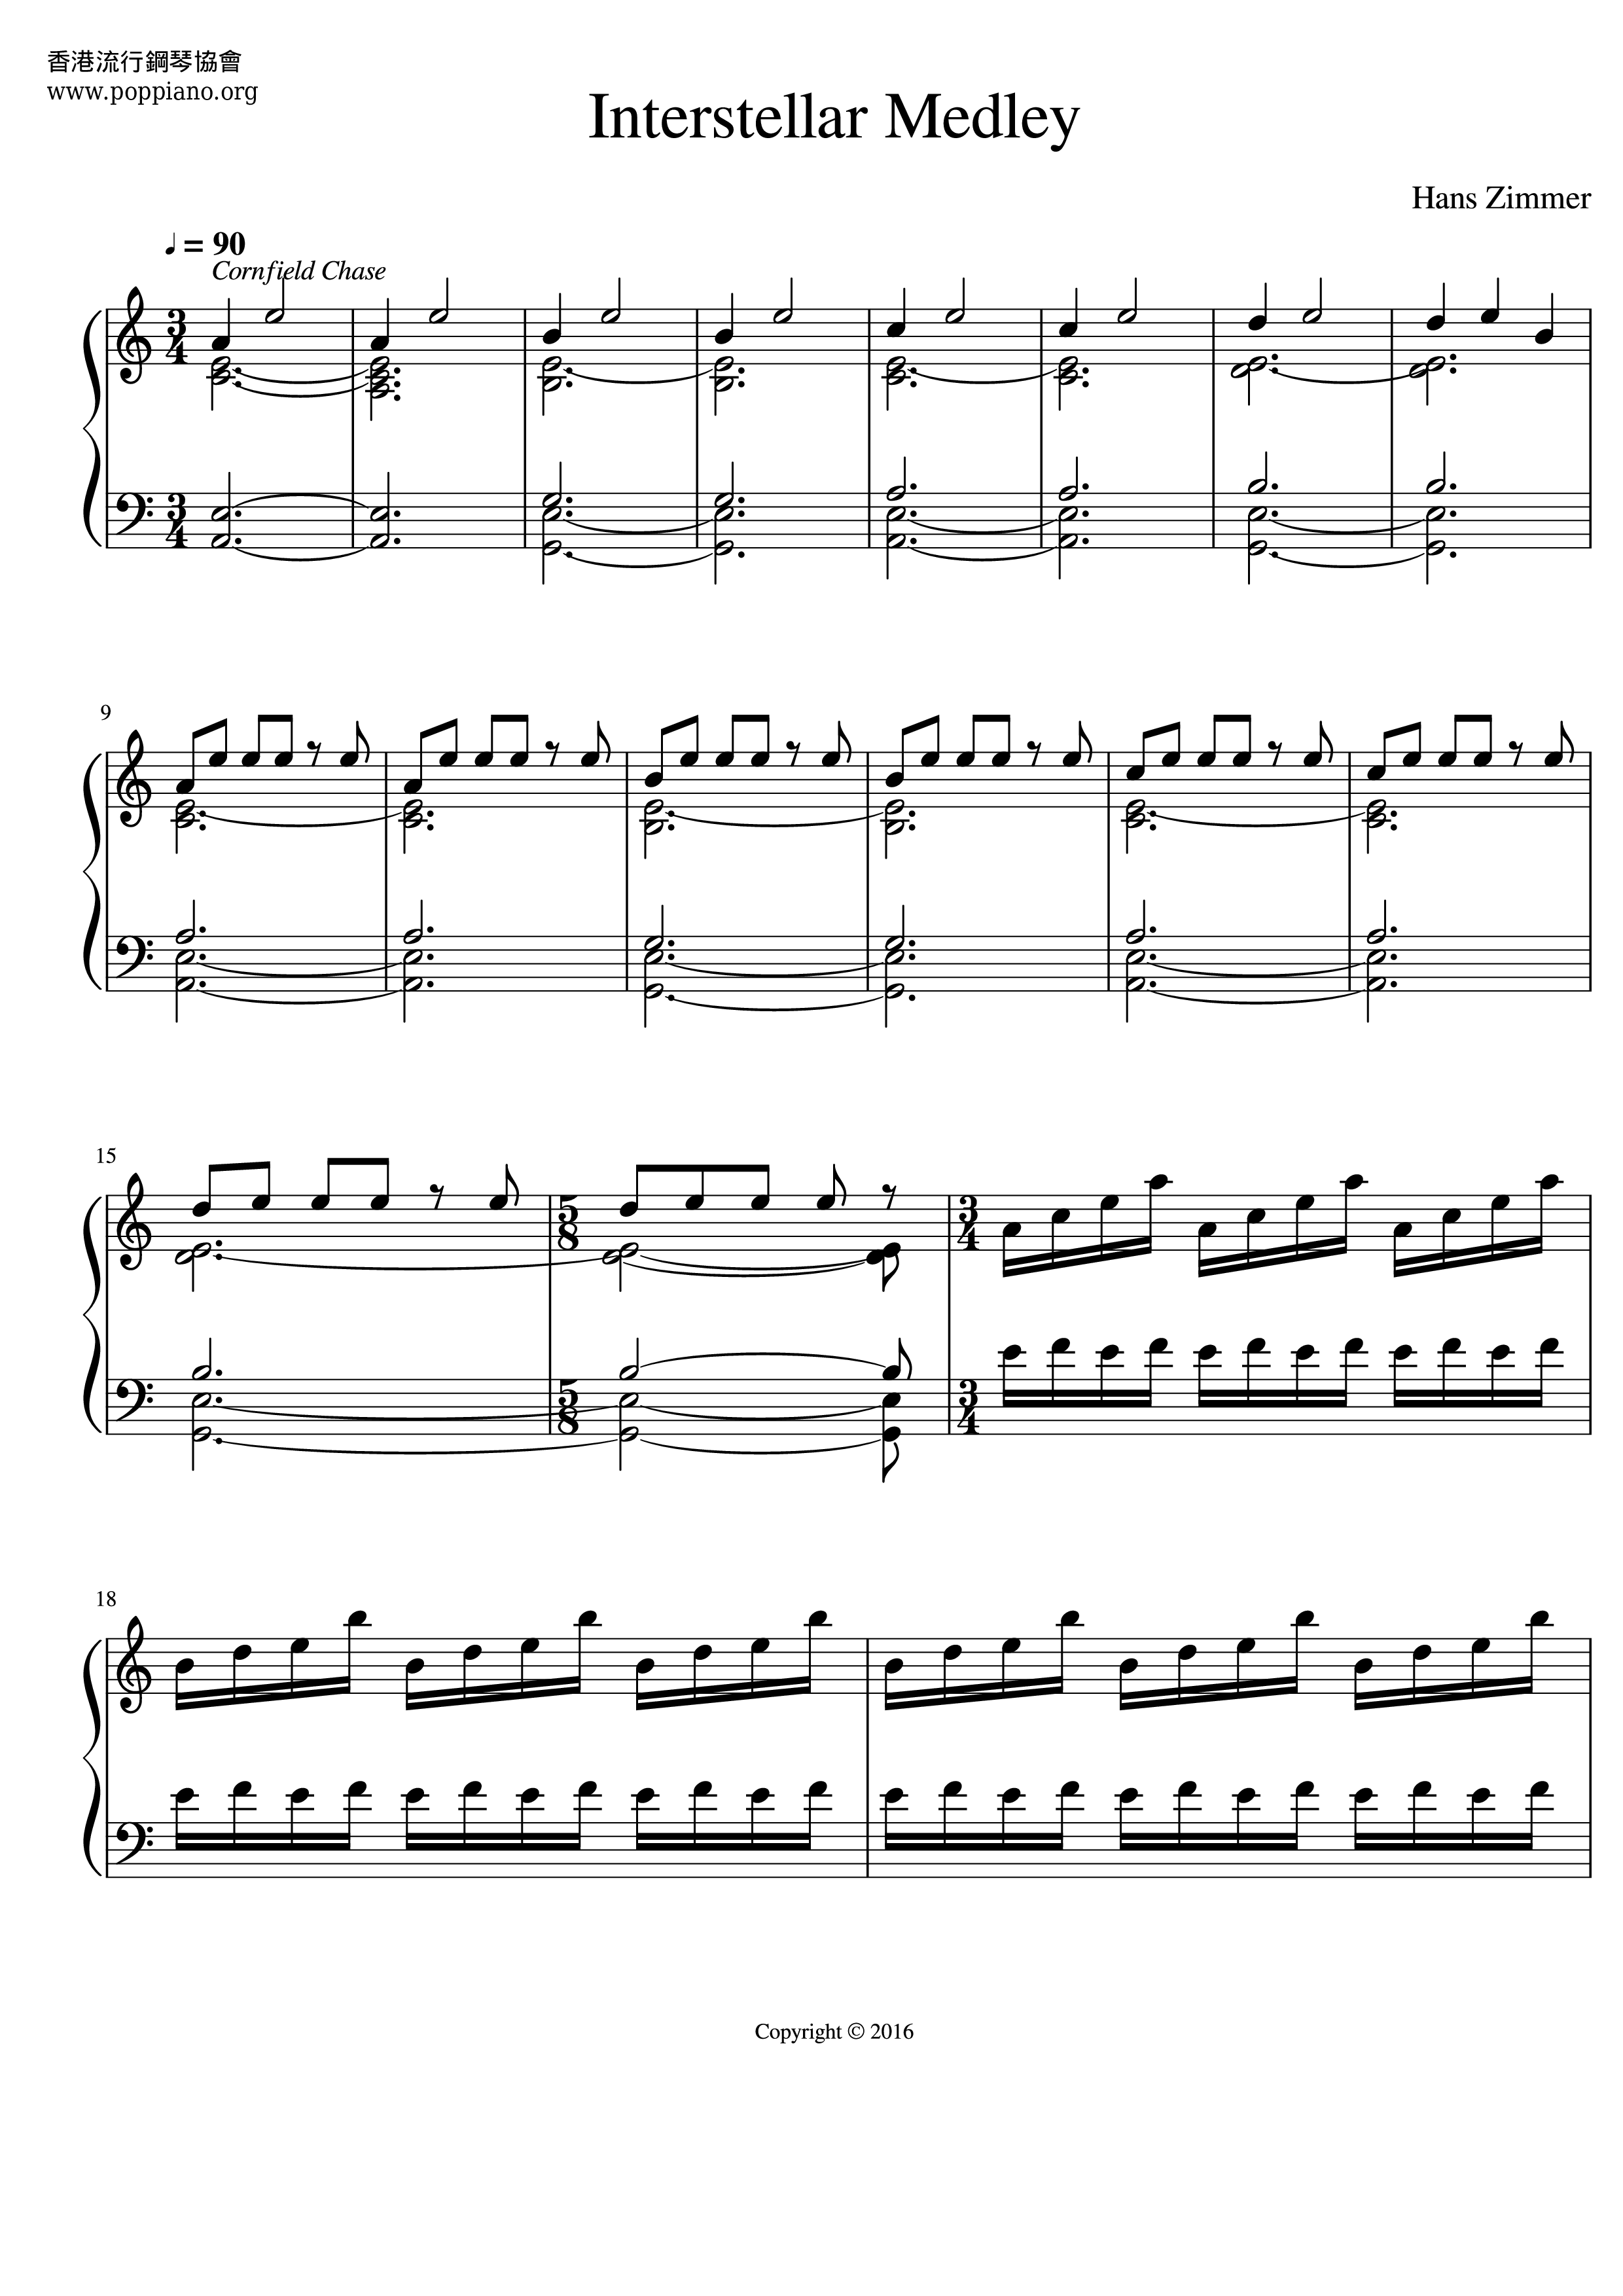 Hans Zimmer-Interstellar Medley Sheet Music pdf, - Free Score Download ★